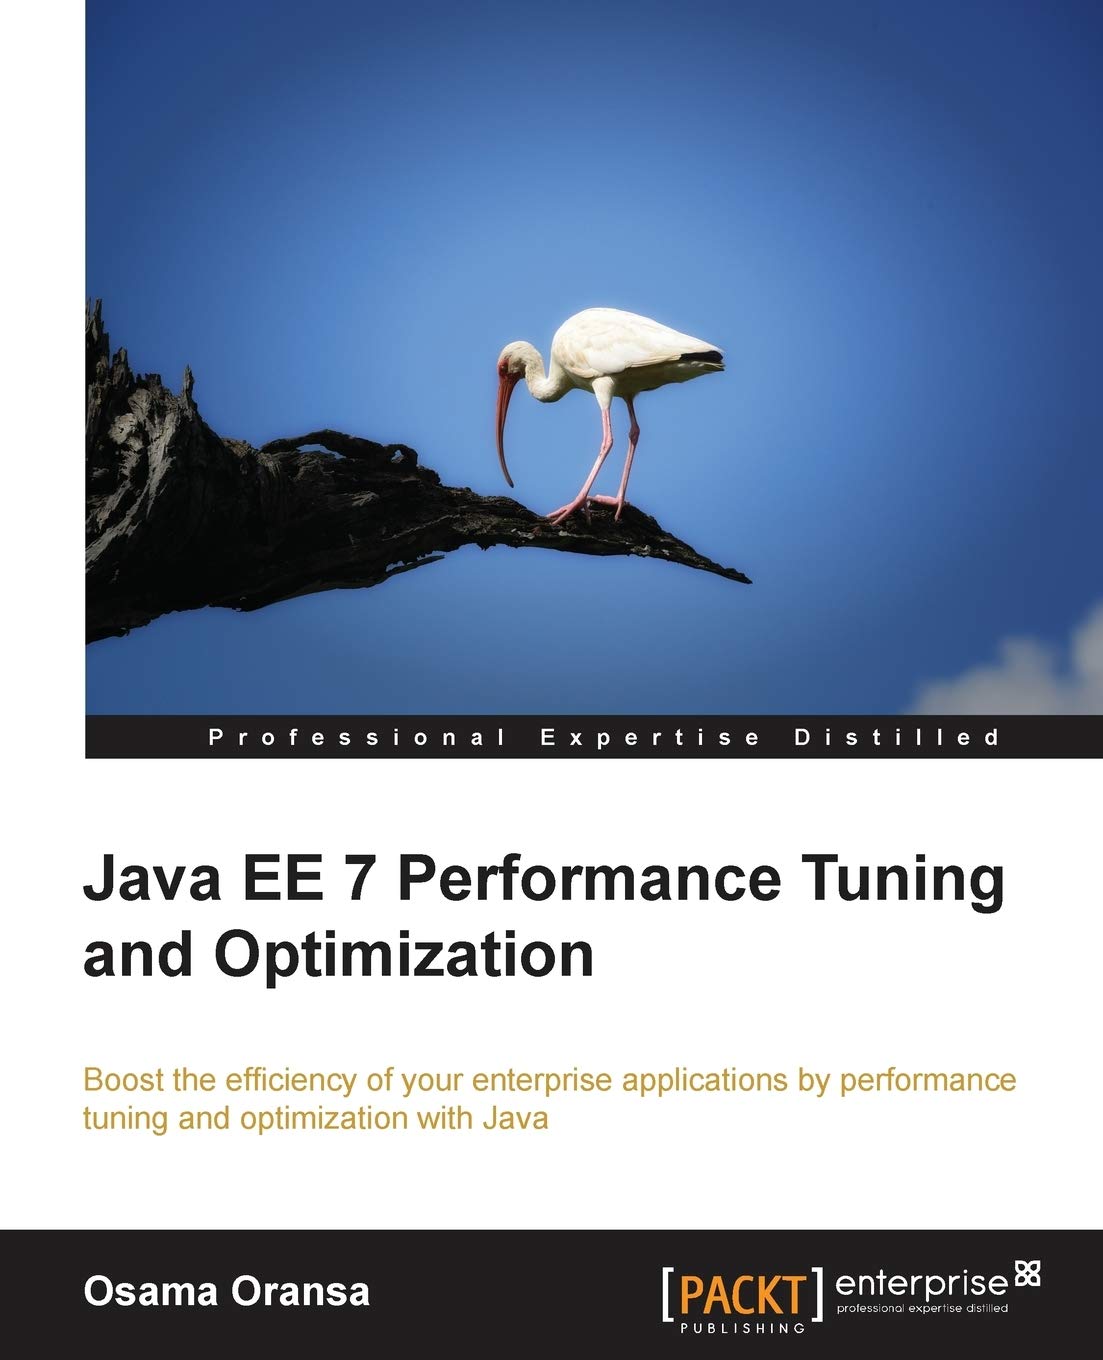 Java EE 7 Performance Tuning and Optimization by Osama Oransa